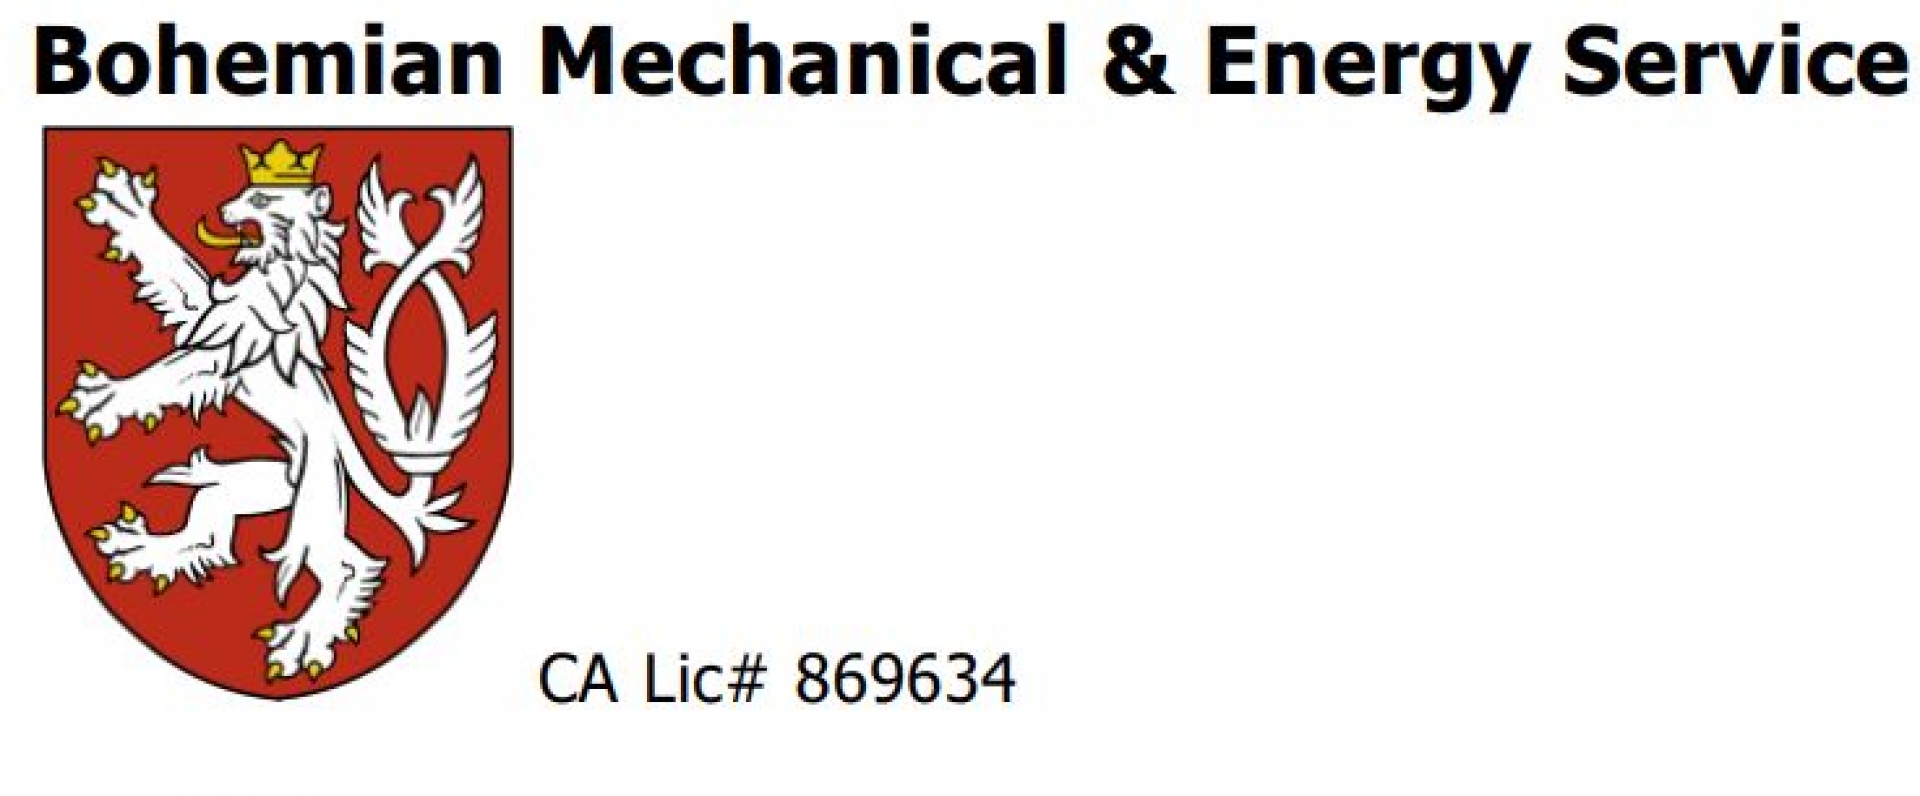 Bohemian Mechanical and Energy Service logo